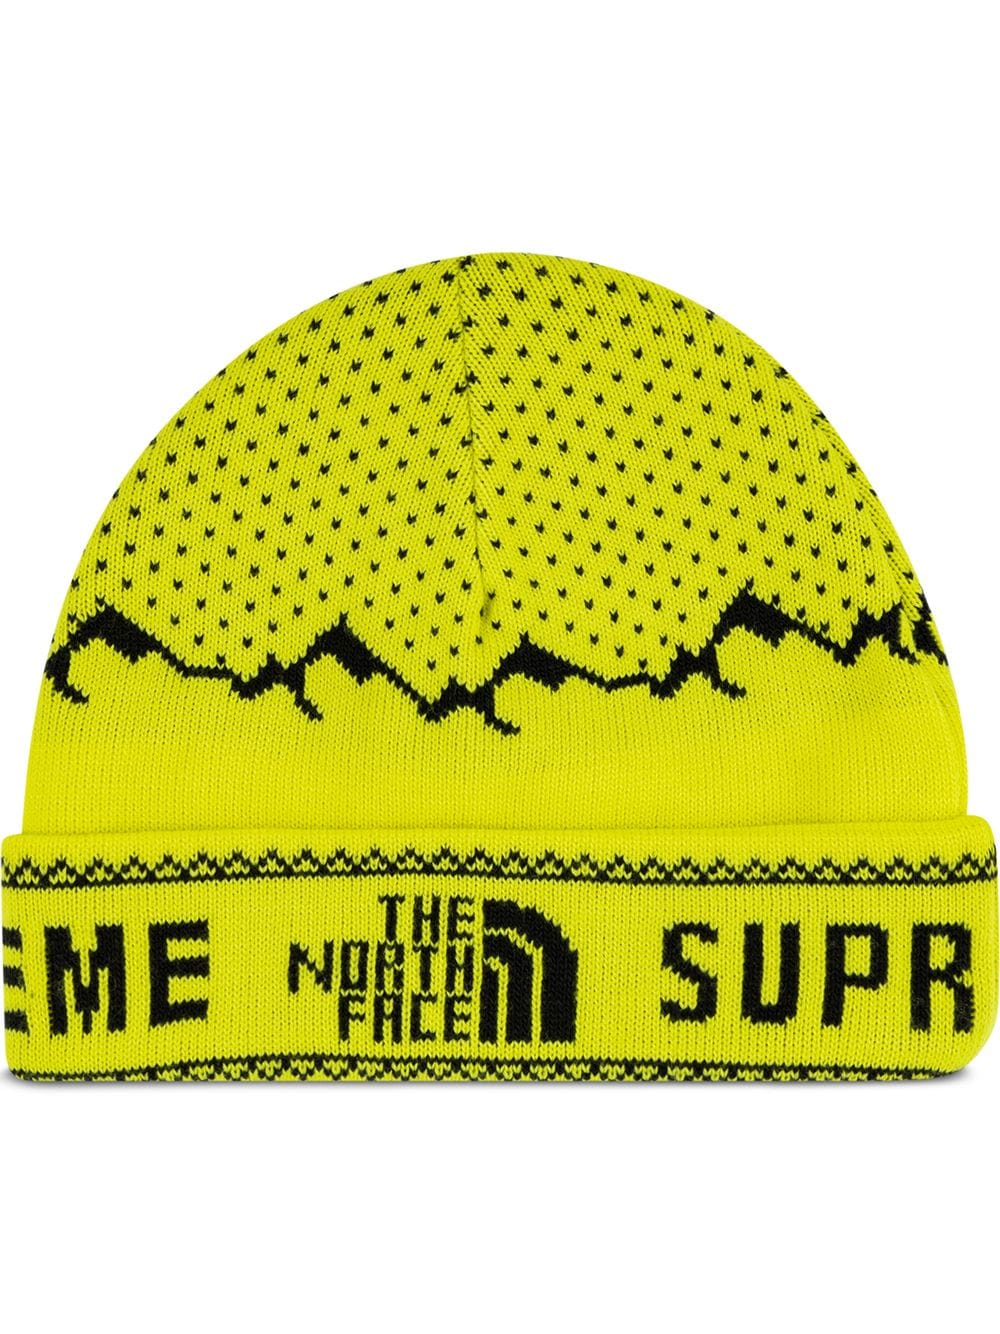 Supreme Tnf 底边上翻套头帽 In Yellow